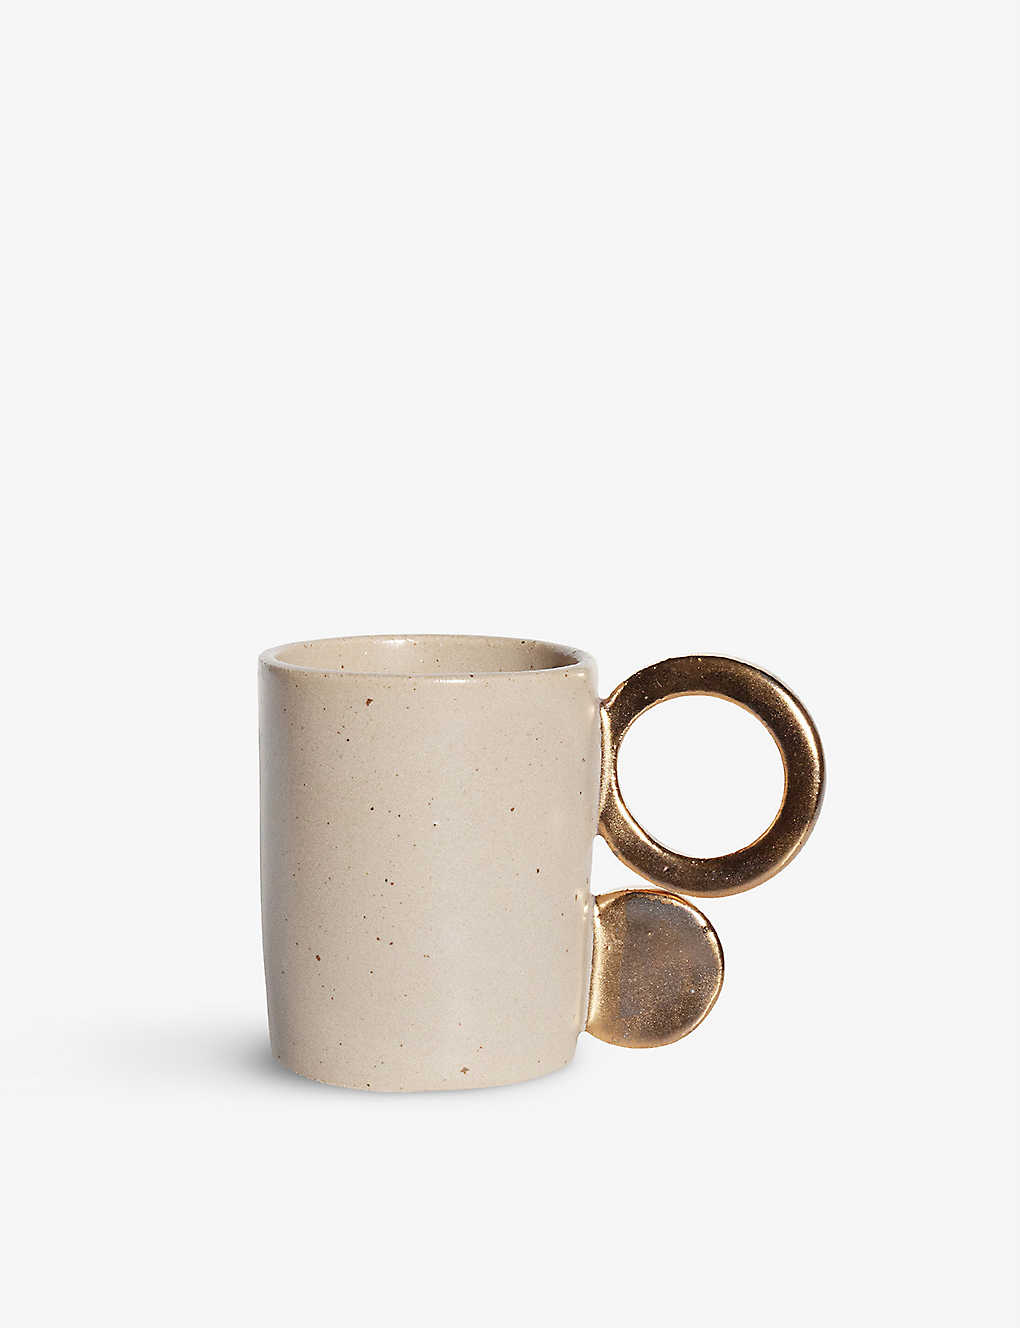 MIYELLE オービタル1 メタリックハンドル スペクルド セラミックマグ 9.5cm Orbital I metallic-handle speckled ceramic mug 9.5cm Cream and Gold